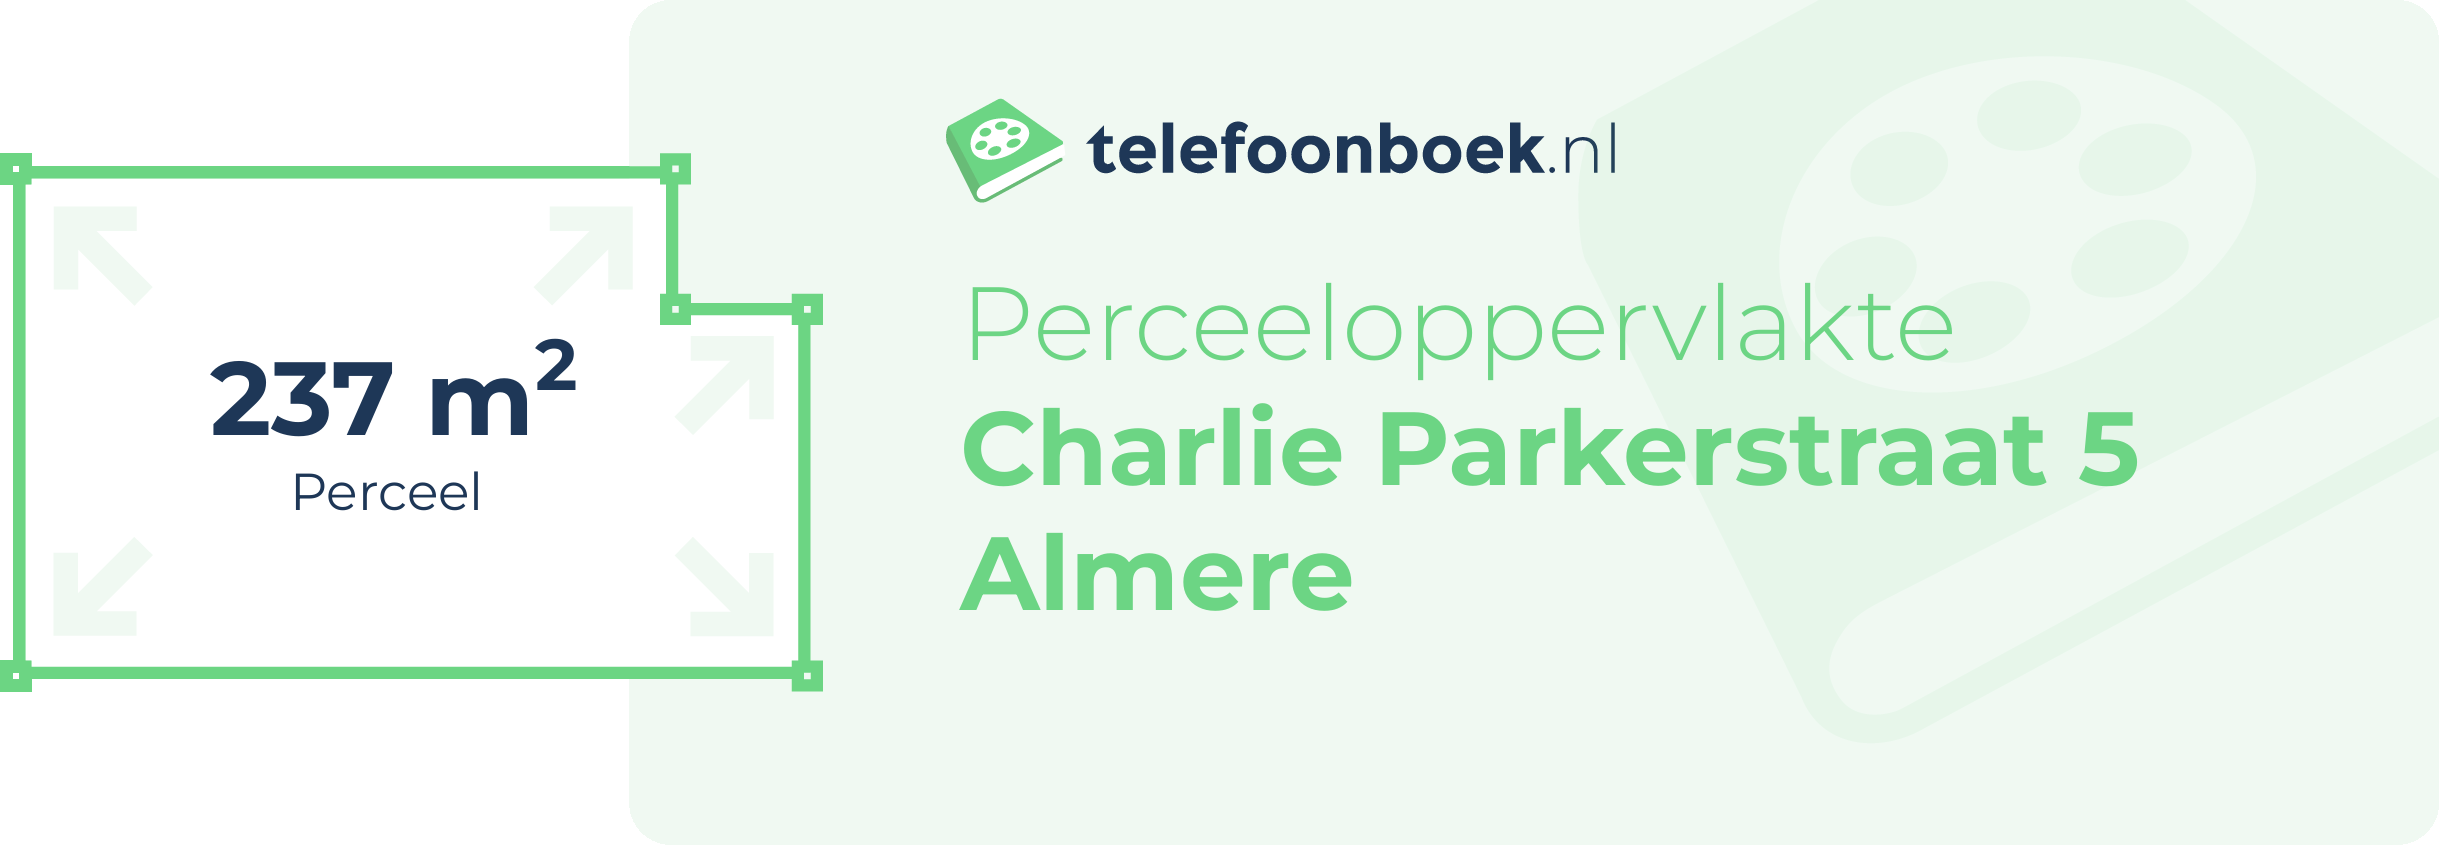 Perceeloppervlakte Charlie Parkerstraat 5 Almere